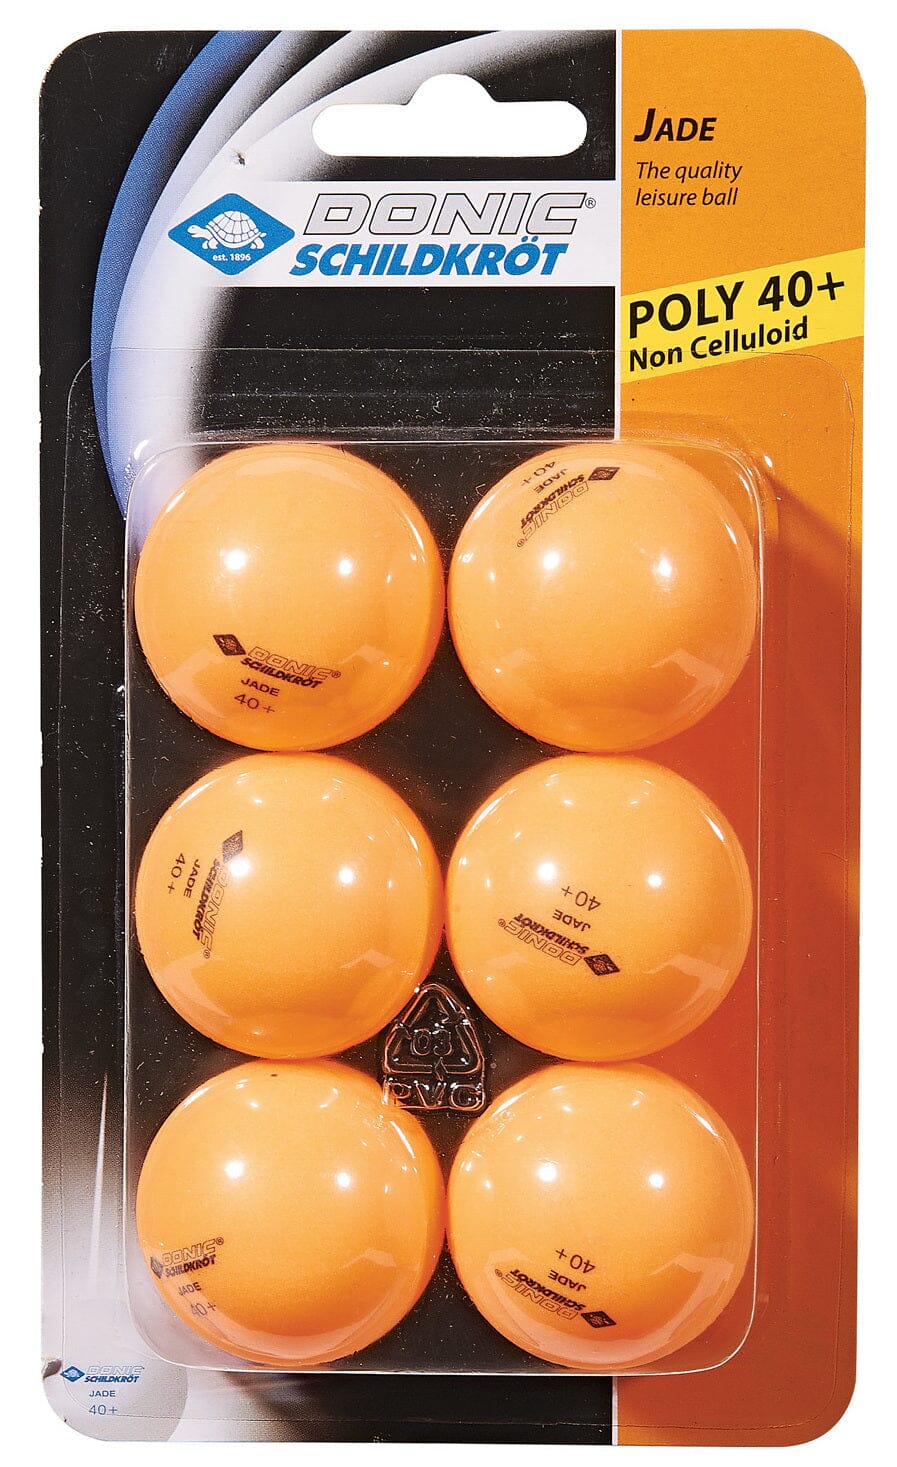 Donic-Schildkrot Jade 40+Table Tennis Balls (pack of 6) Ping-pong balls Donic Orange 